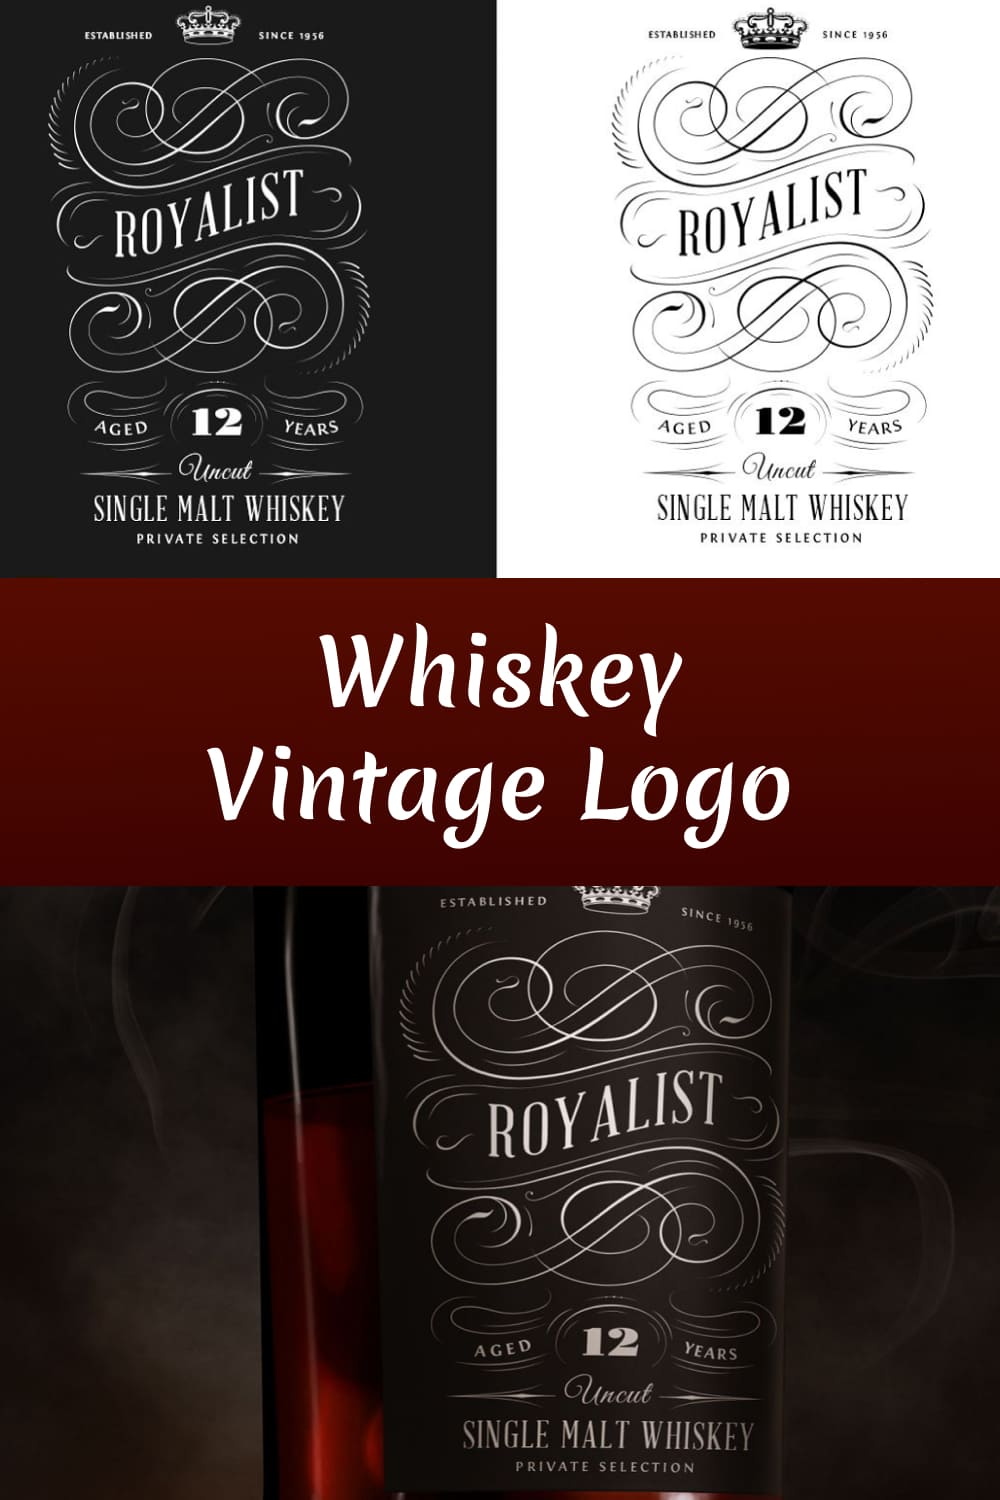 Whiskey Vintage Logo - Pinterest Image Preview.